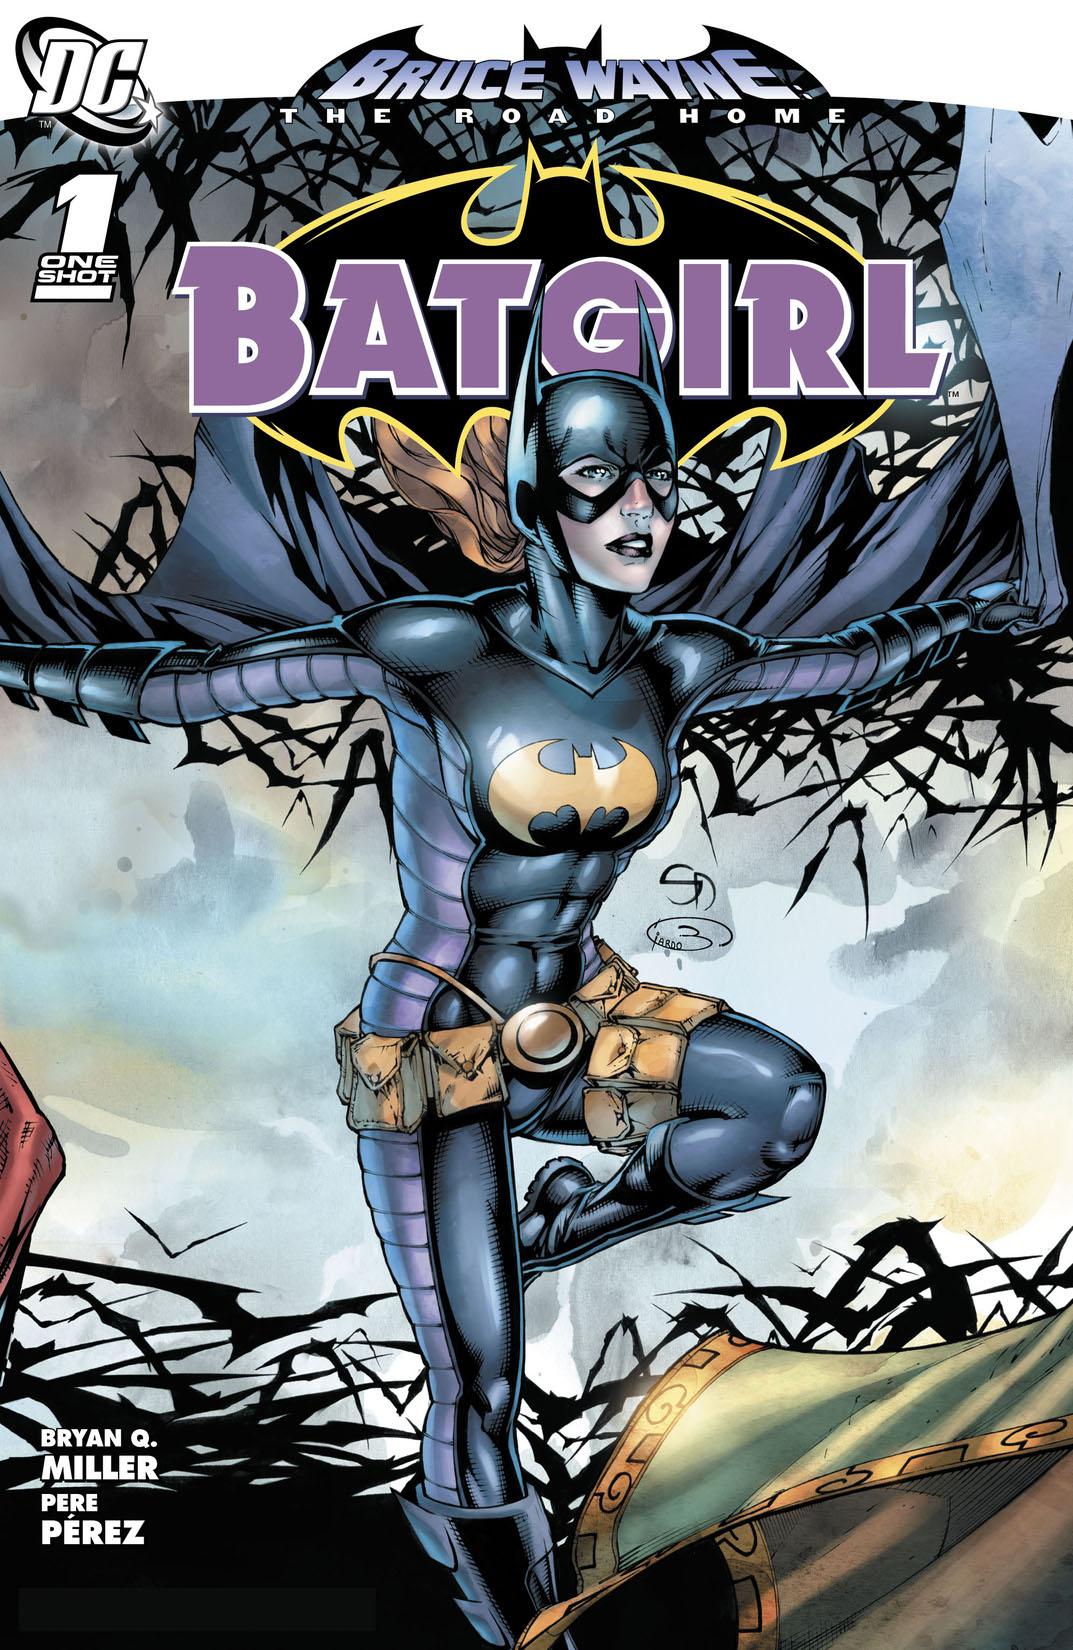 Bruce Wayne: The Road Home: Batgirl #1 preview images